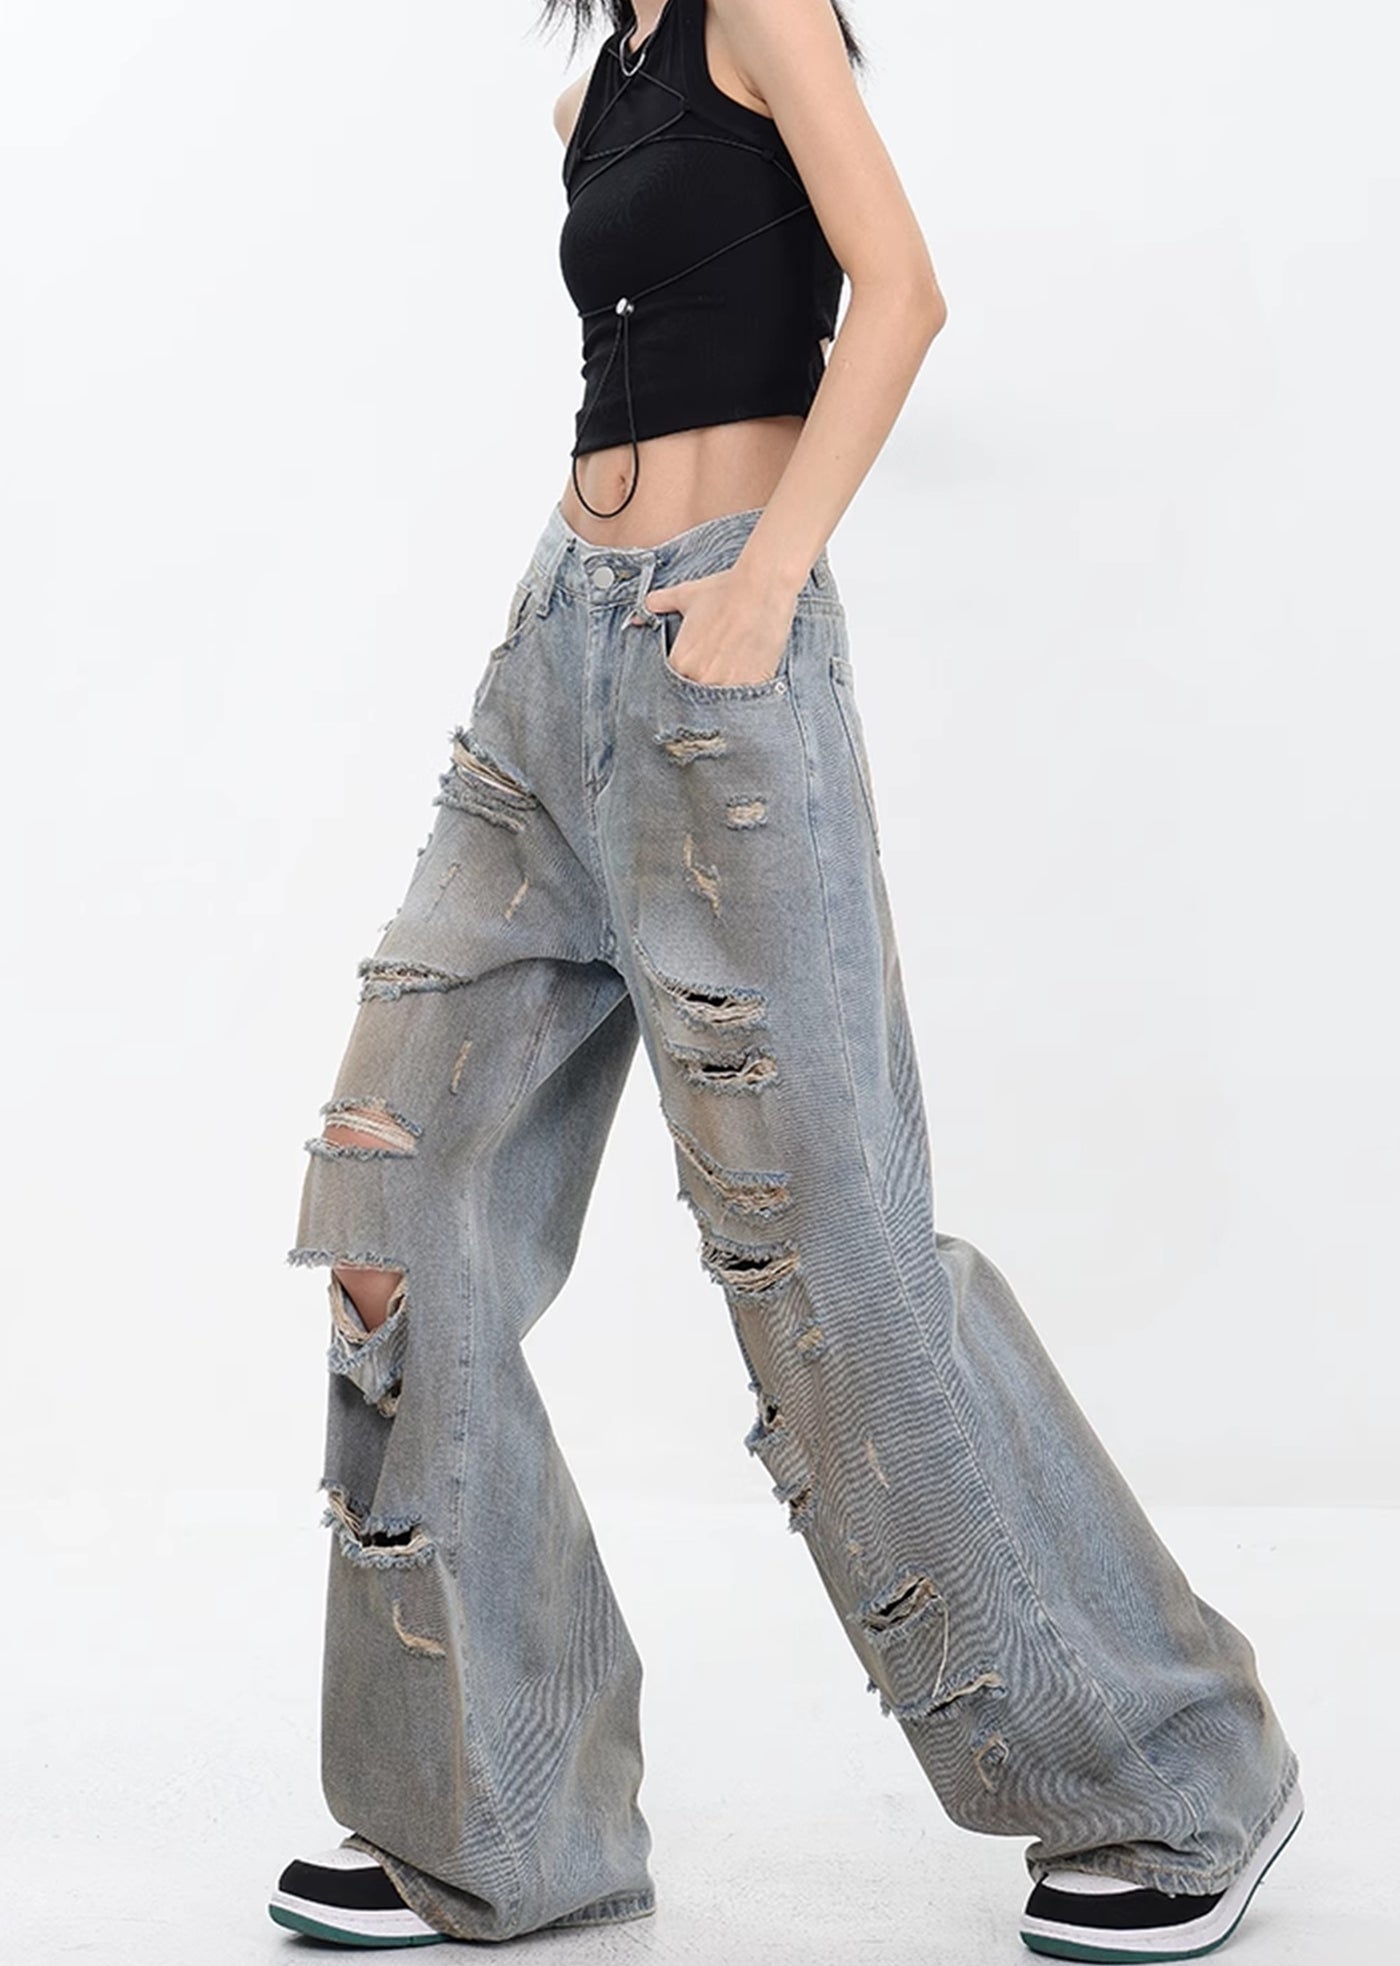 【Ken studio】Grunge-style distressed tattered style denim pants  KS0010